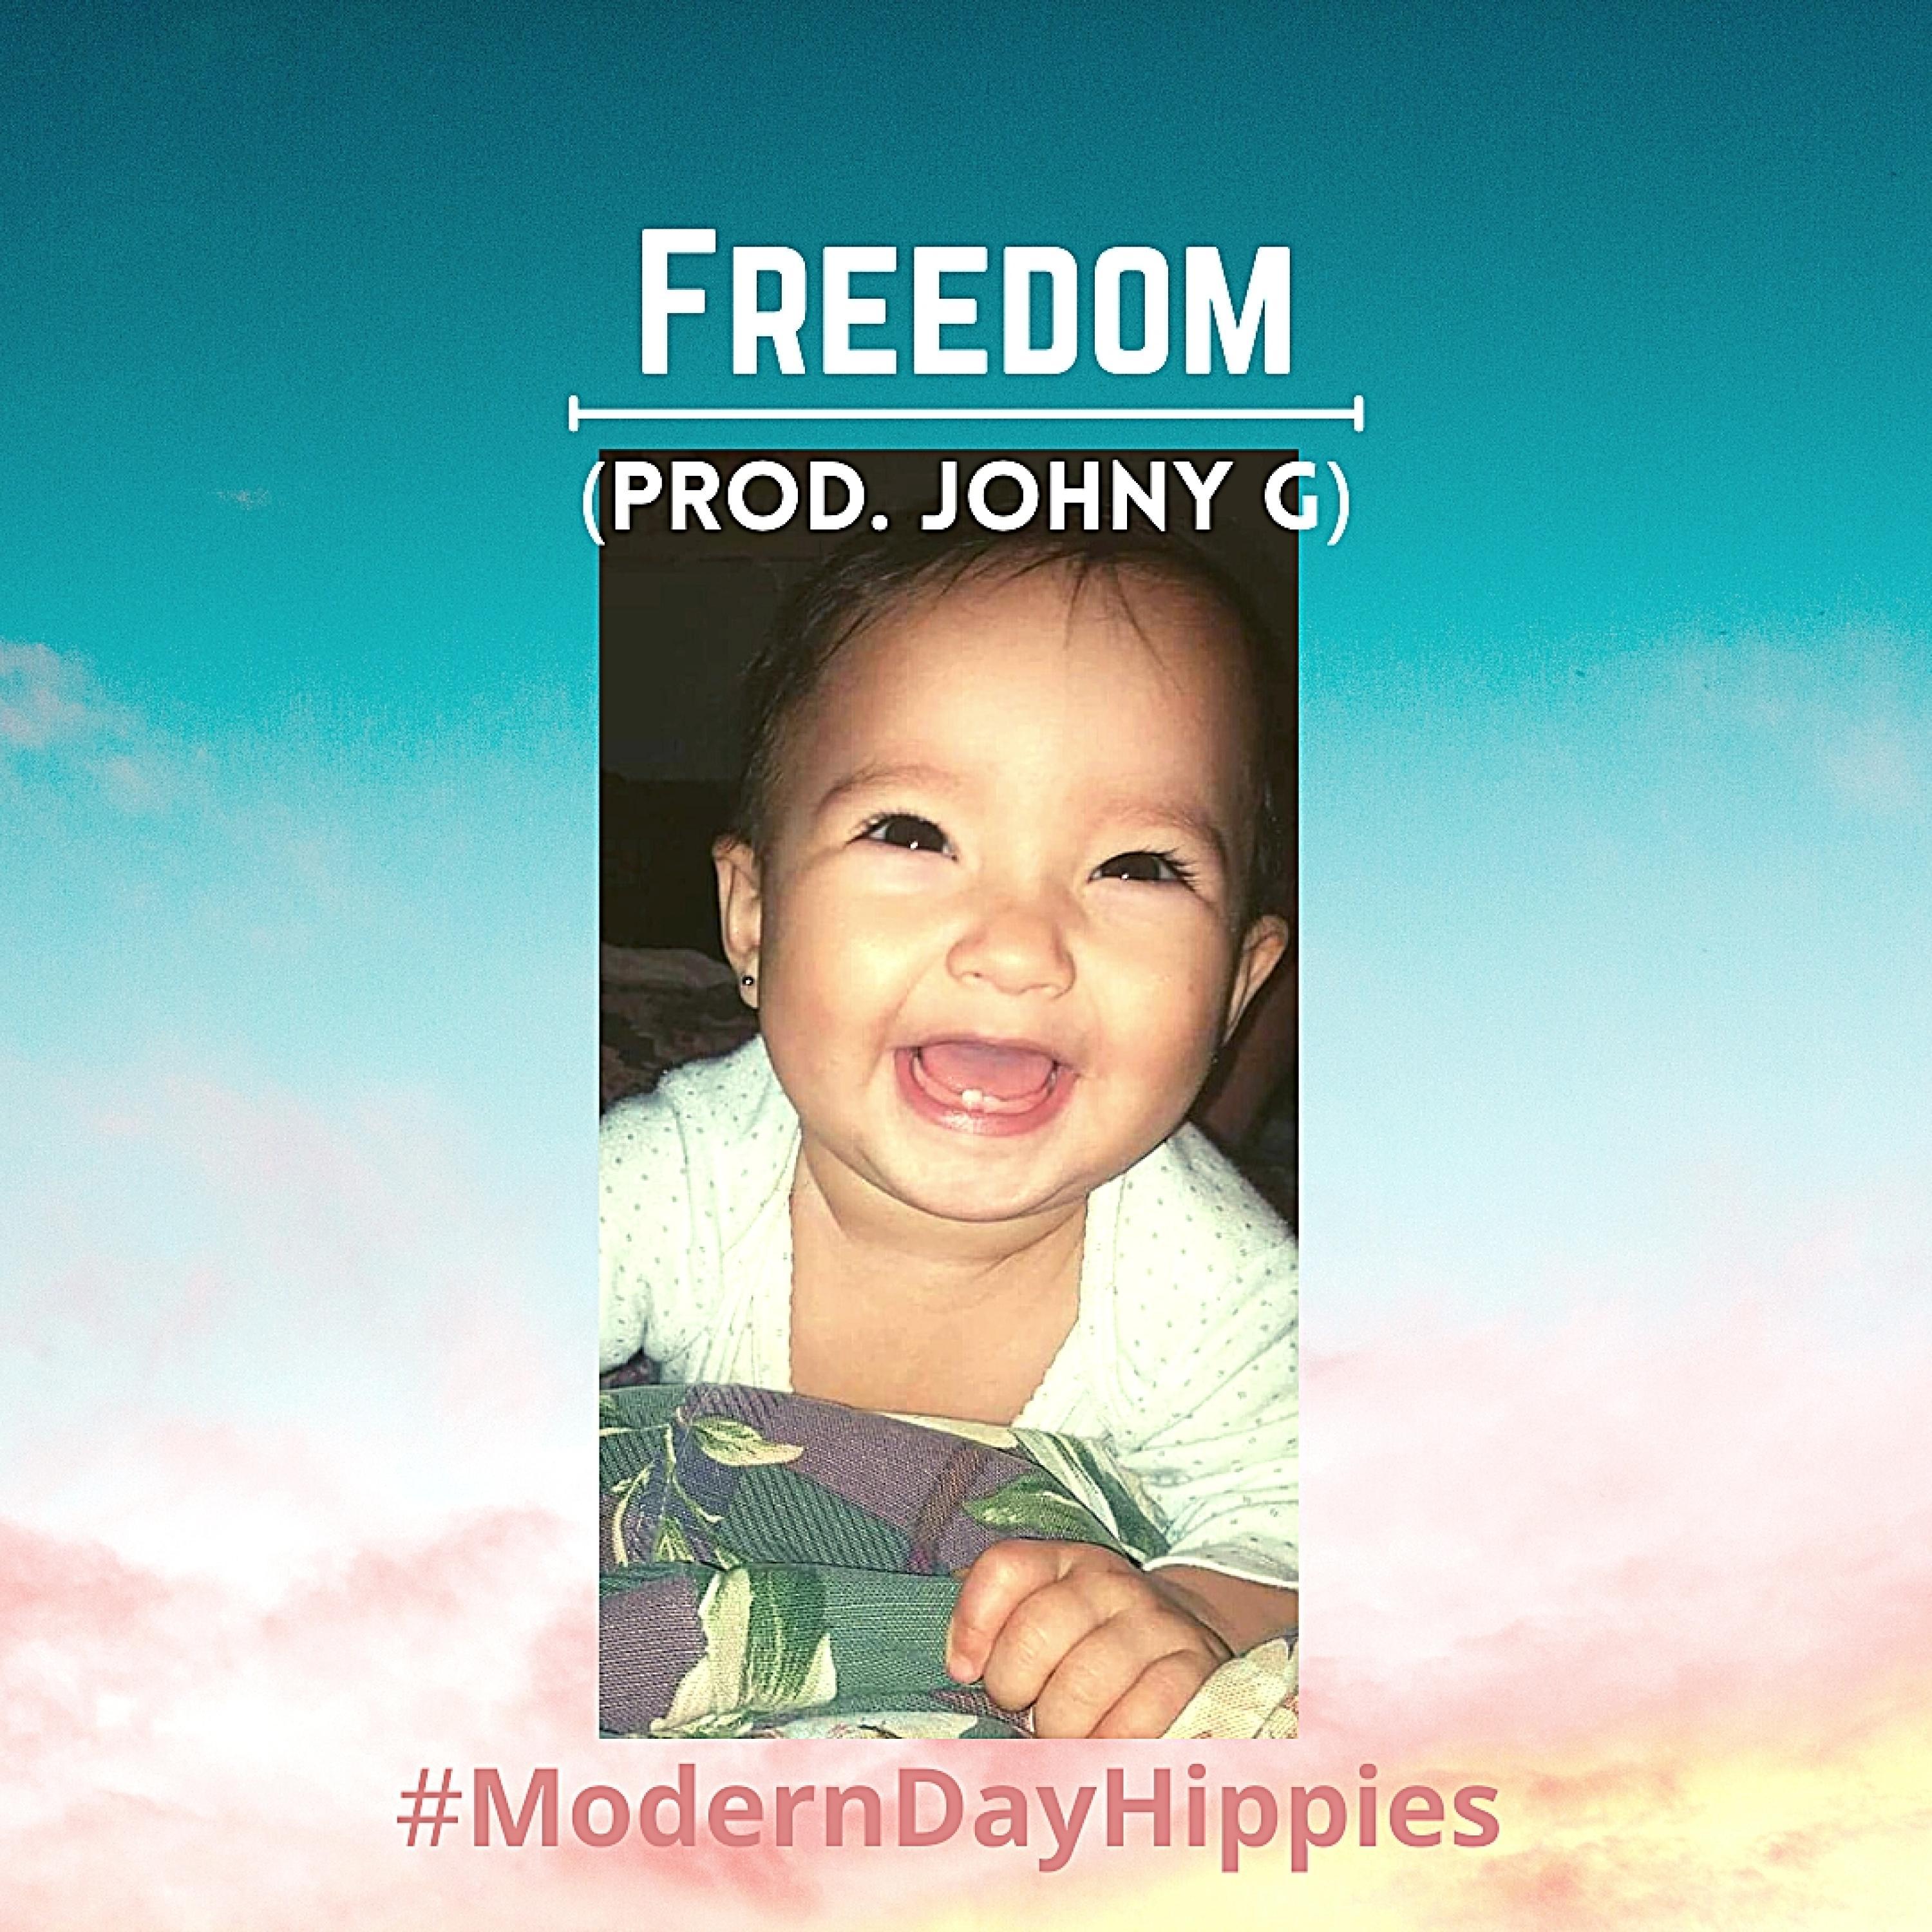 ModernDayHippies - Freedom